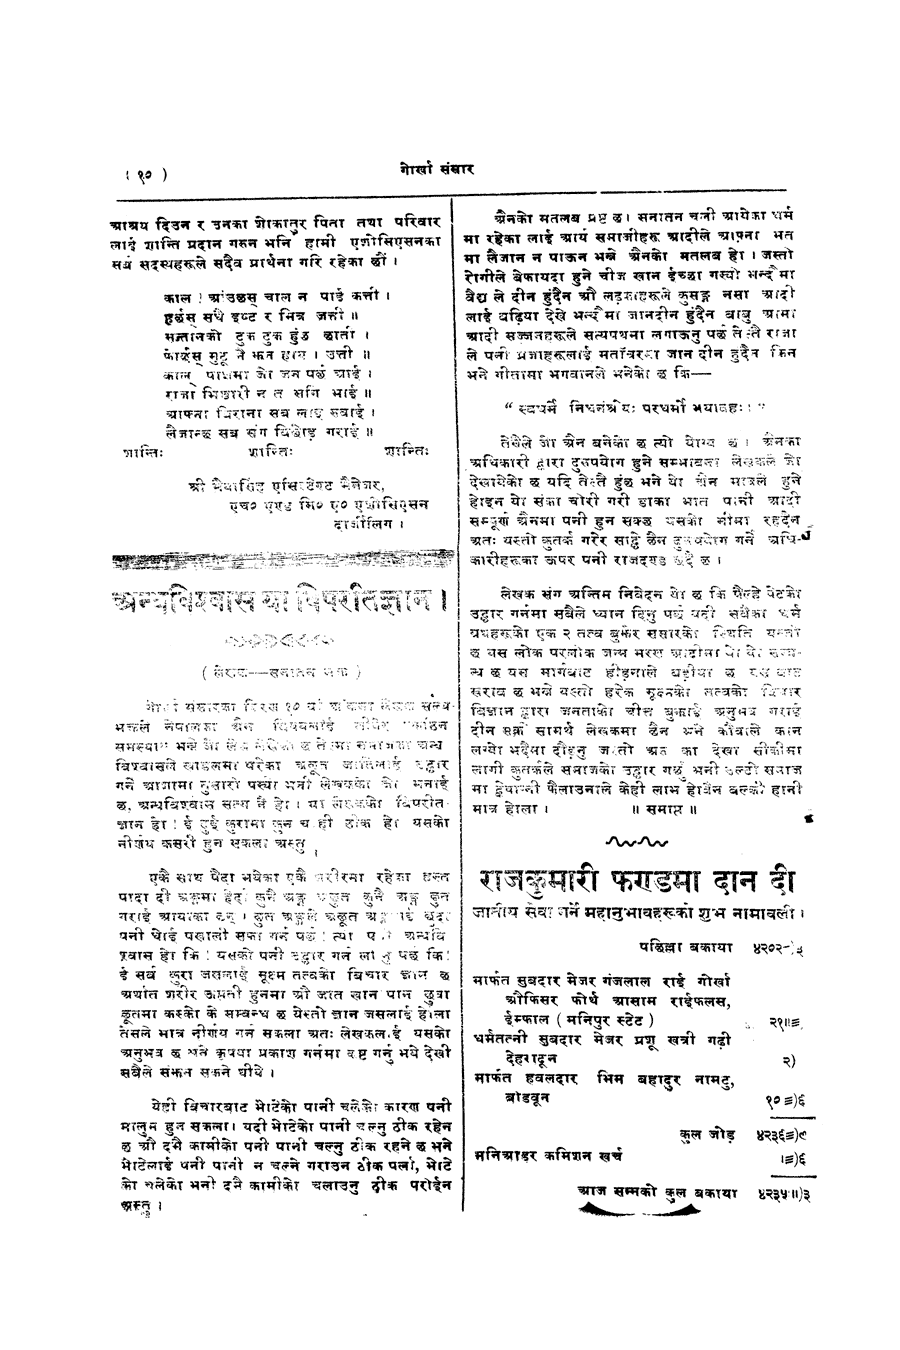 Gorkha Sansar, 23 July 1927, page 10